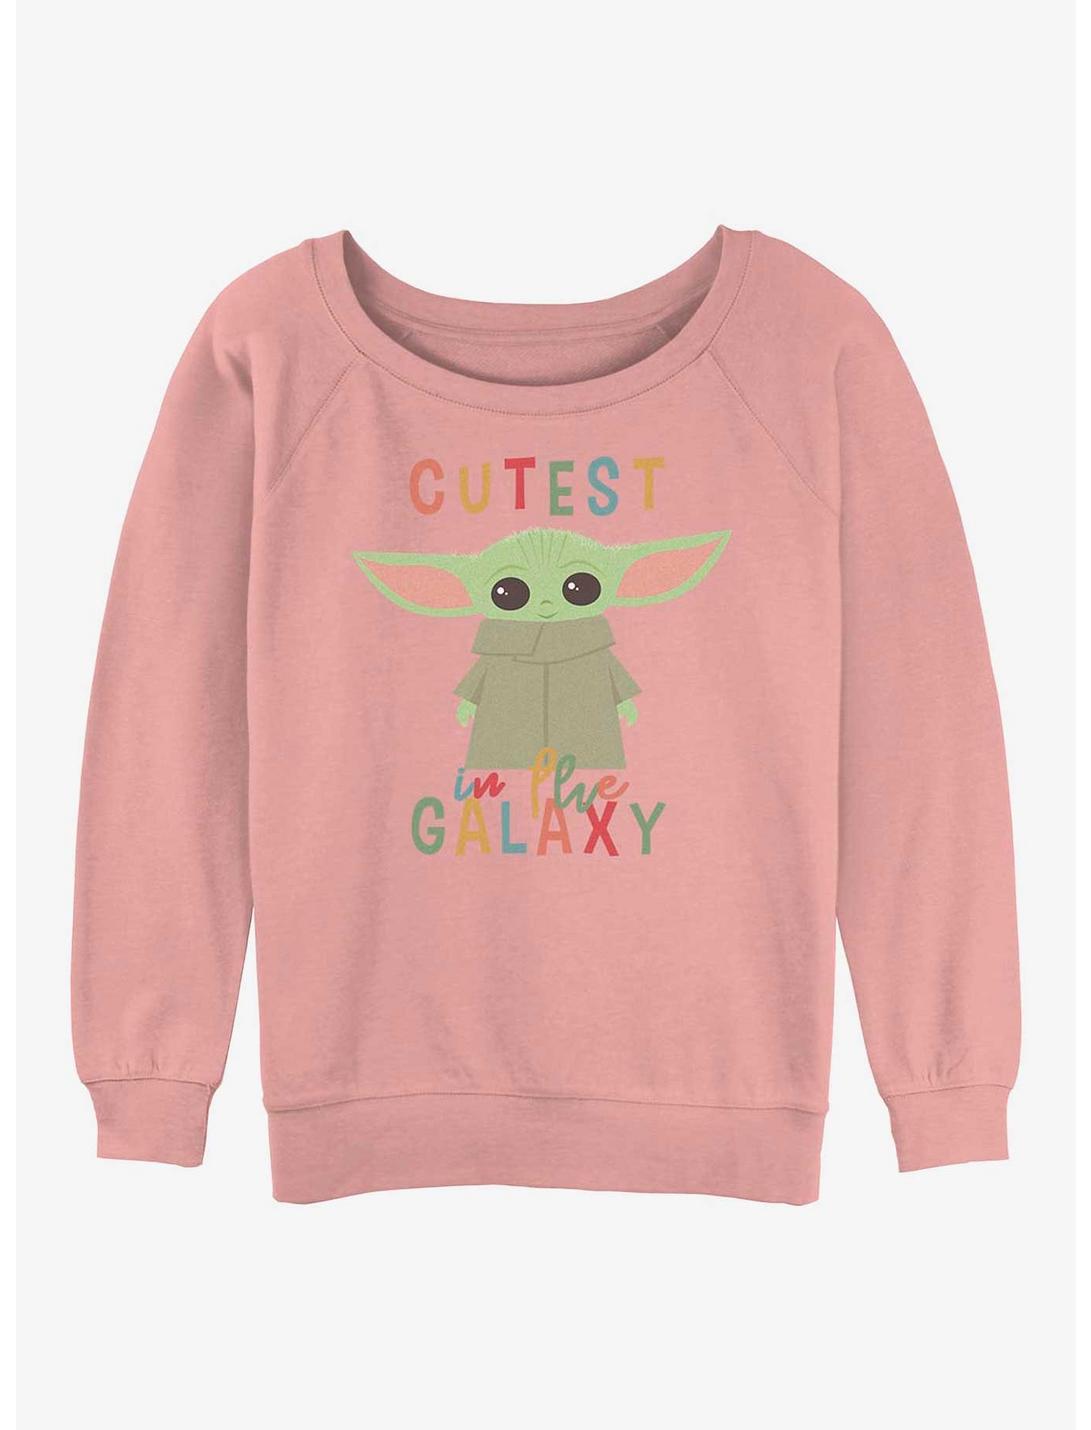 Star Wars The Mandalorian Cutest Child in the Galaxy Womens Slouchy Sweatshirt, DESERTPNK, hi-res